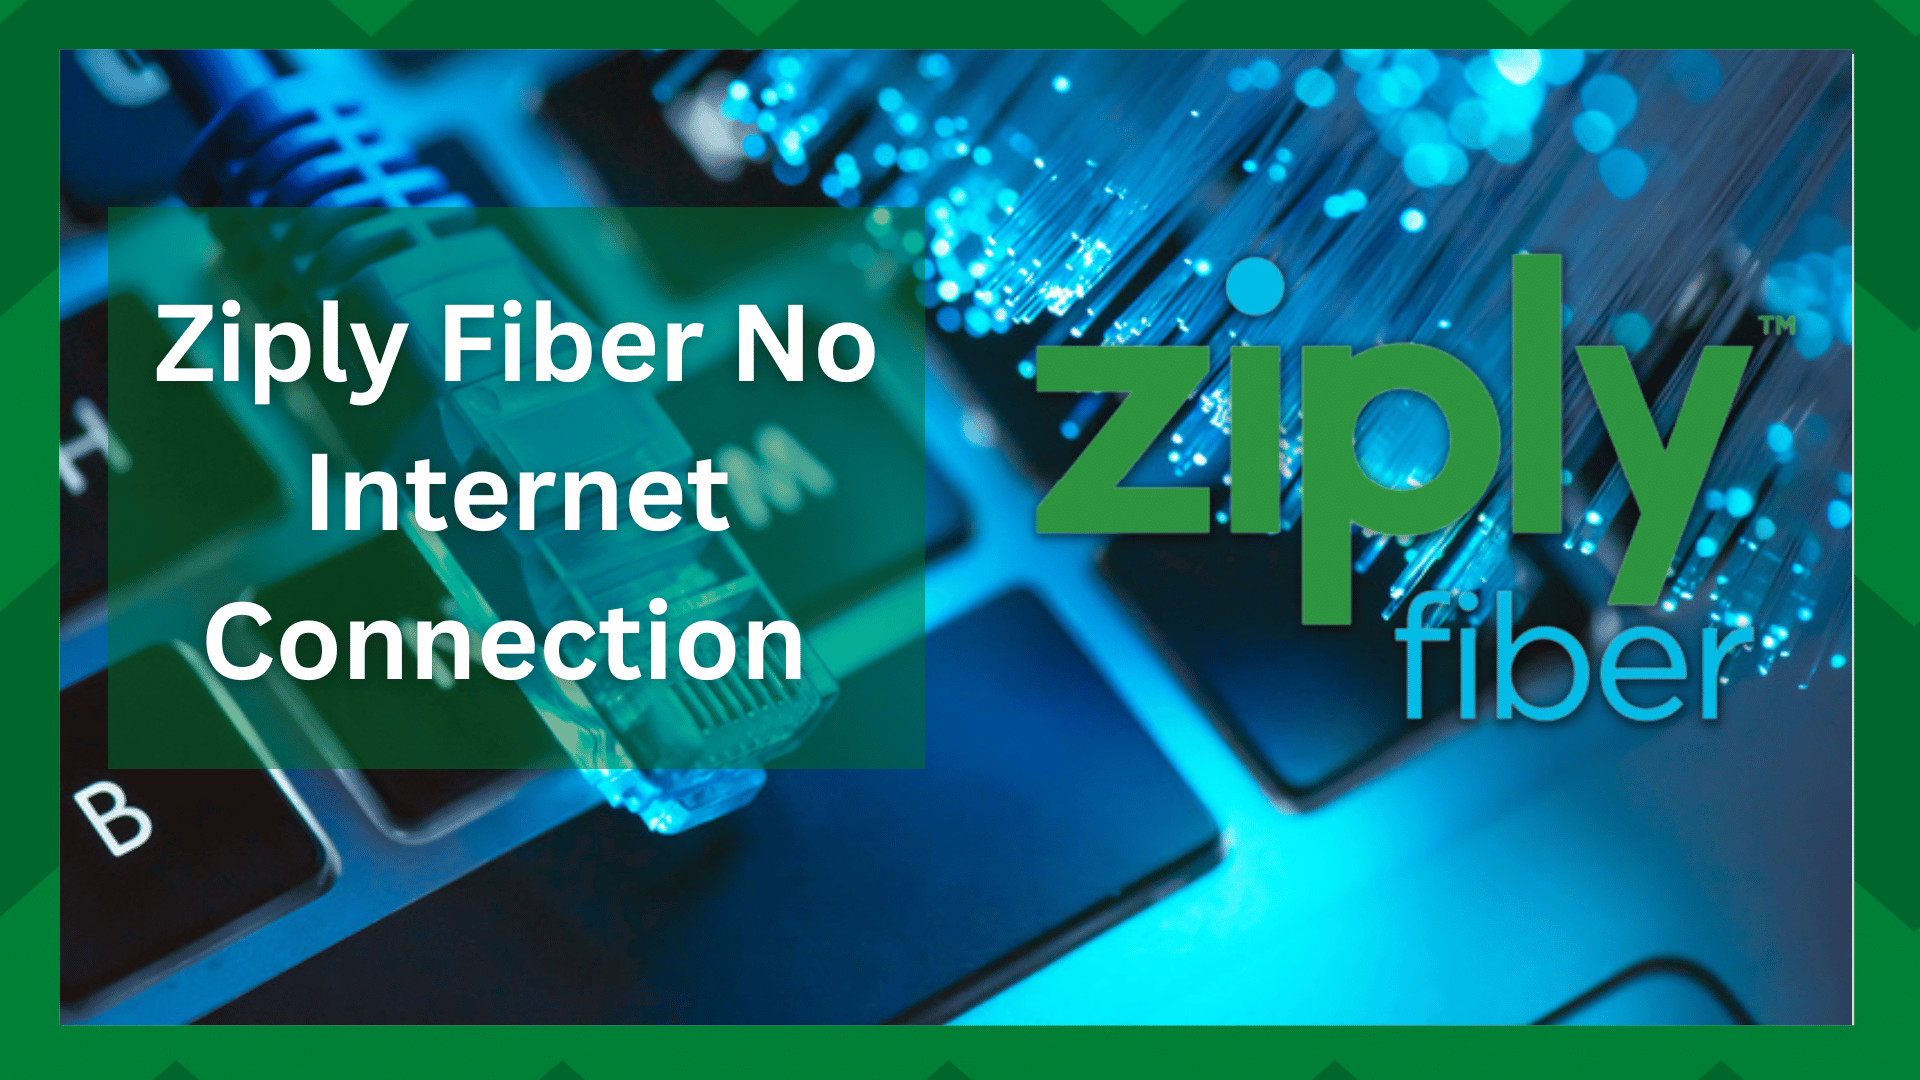 Ziply Fiber No Internet Connection